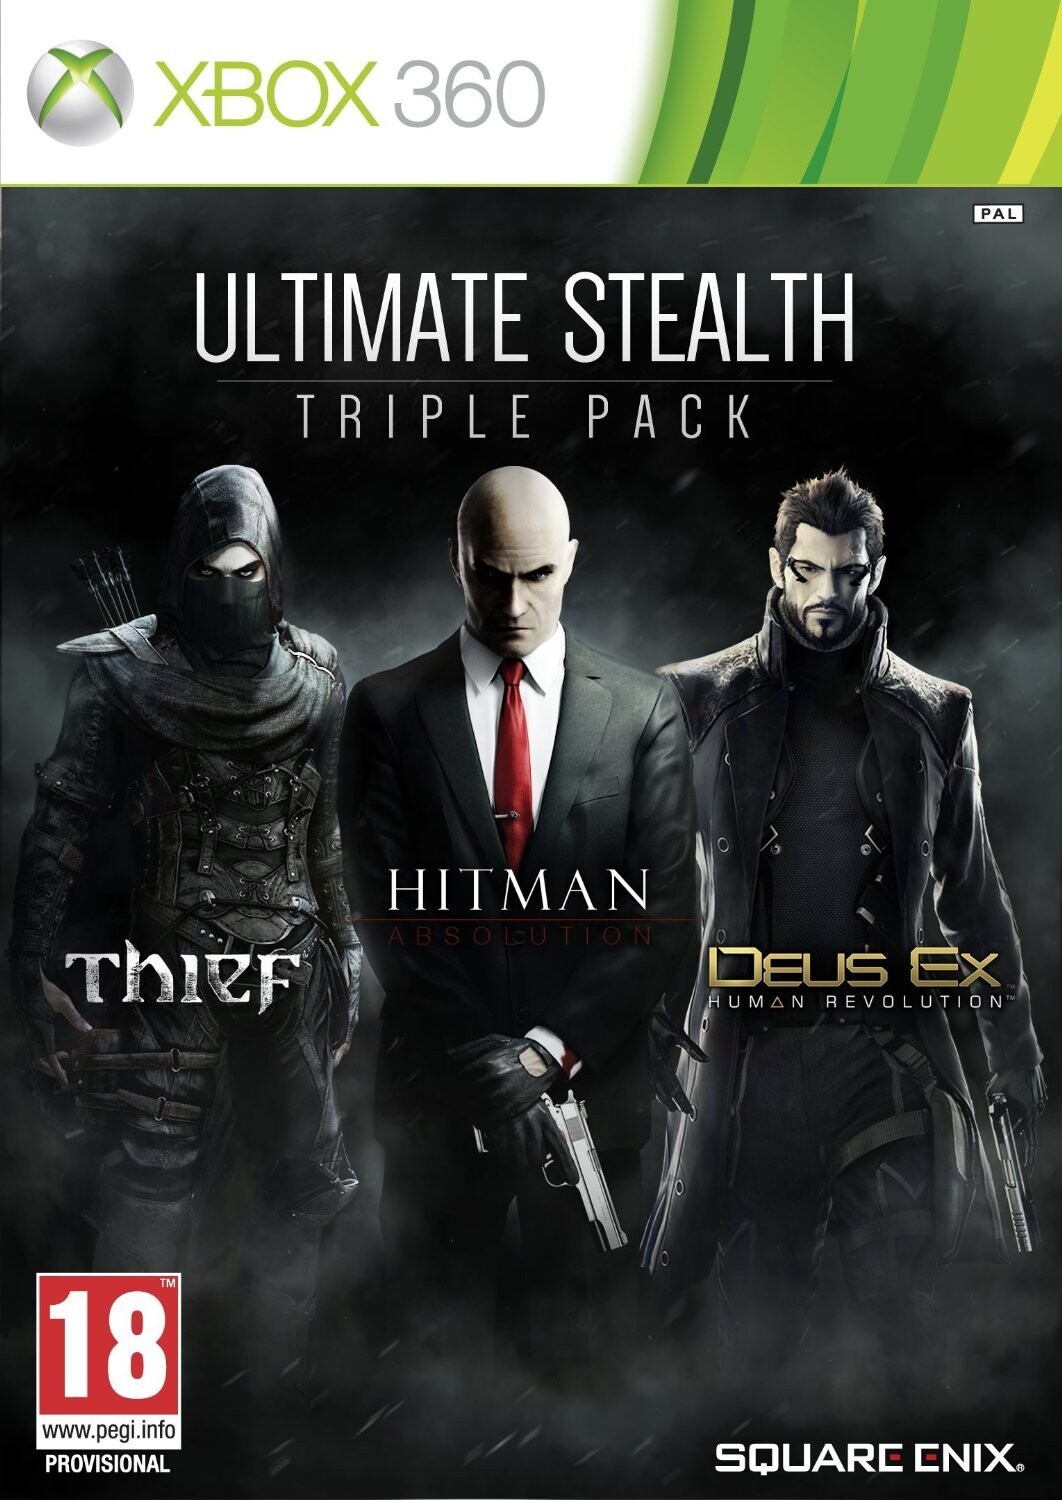 Hitman Thief And Deus Ex Bundle xbox 360 → Køb billigt her - Gucca.dk